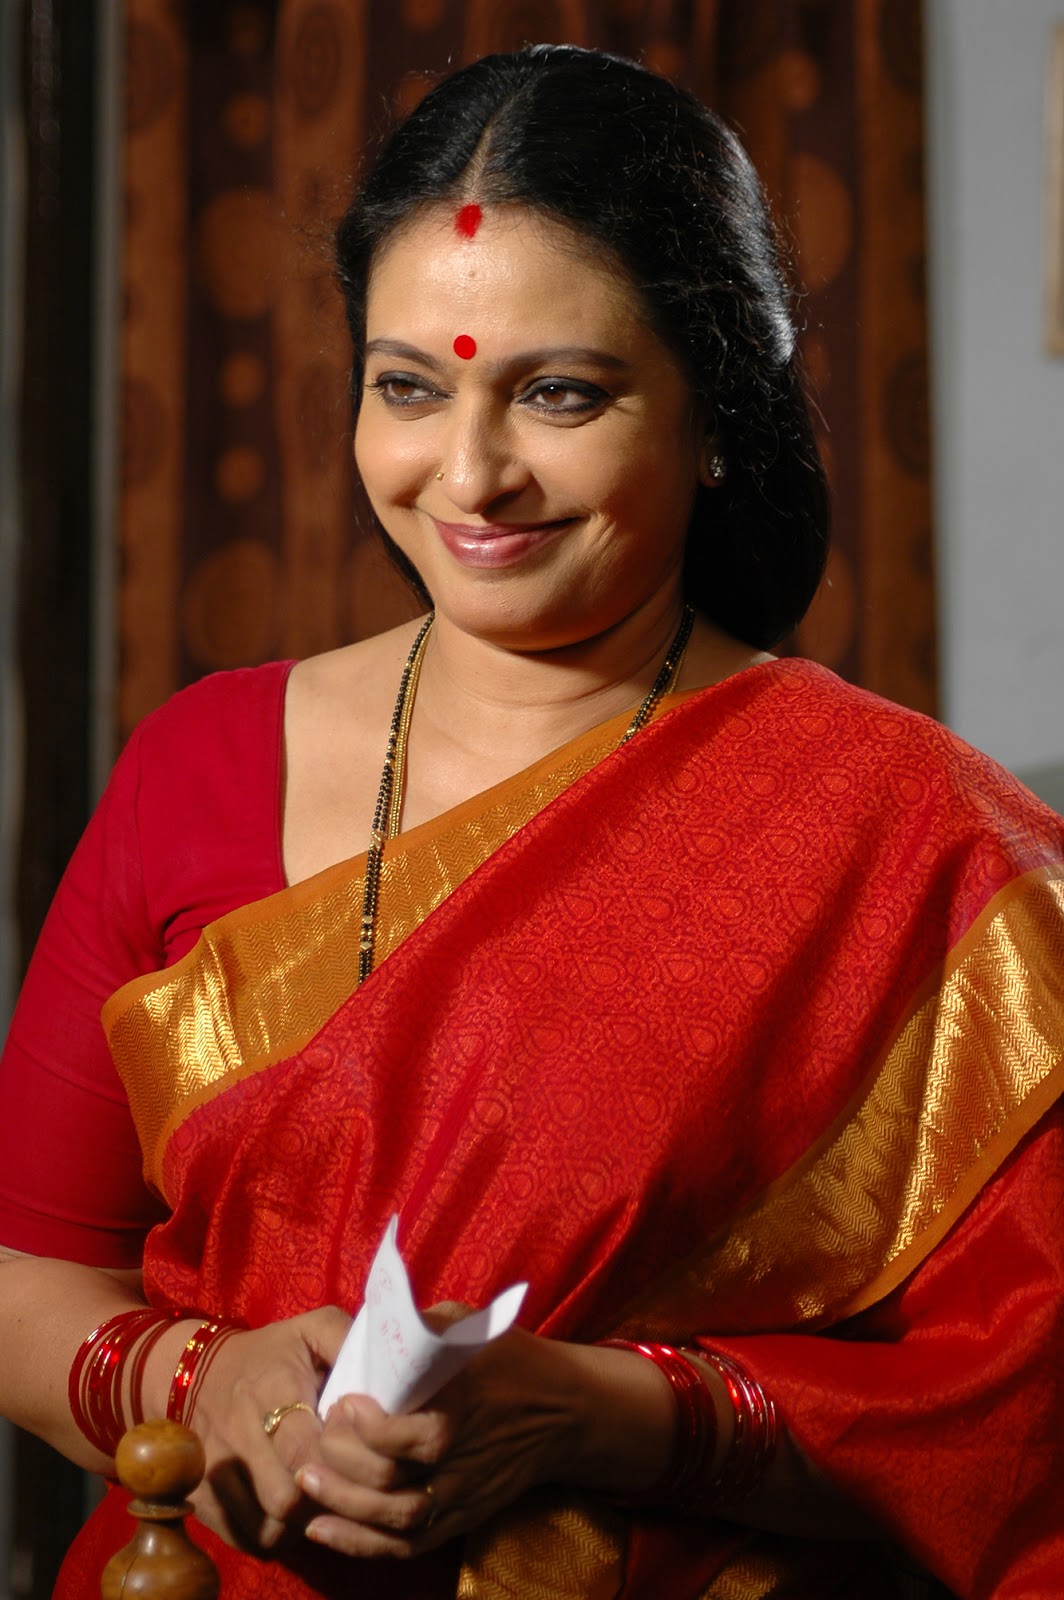 amma wallpapers,sari,event,tradition,ceremony,smile